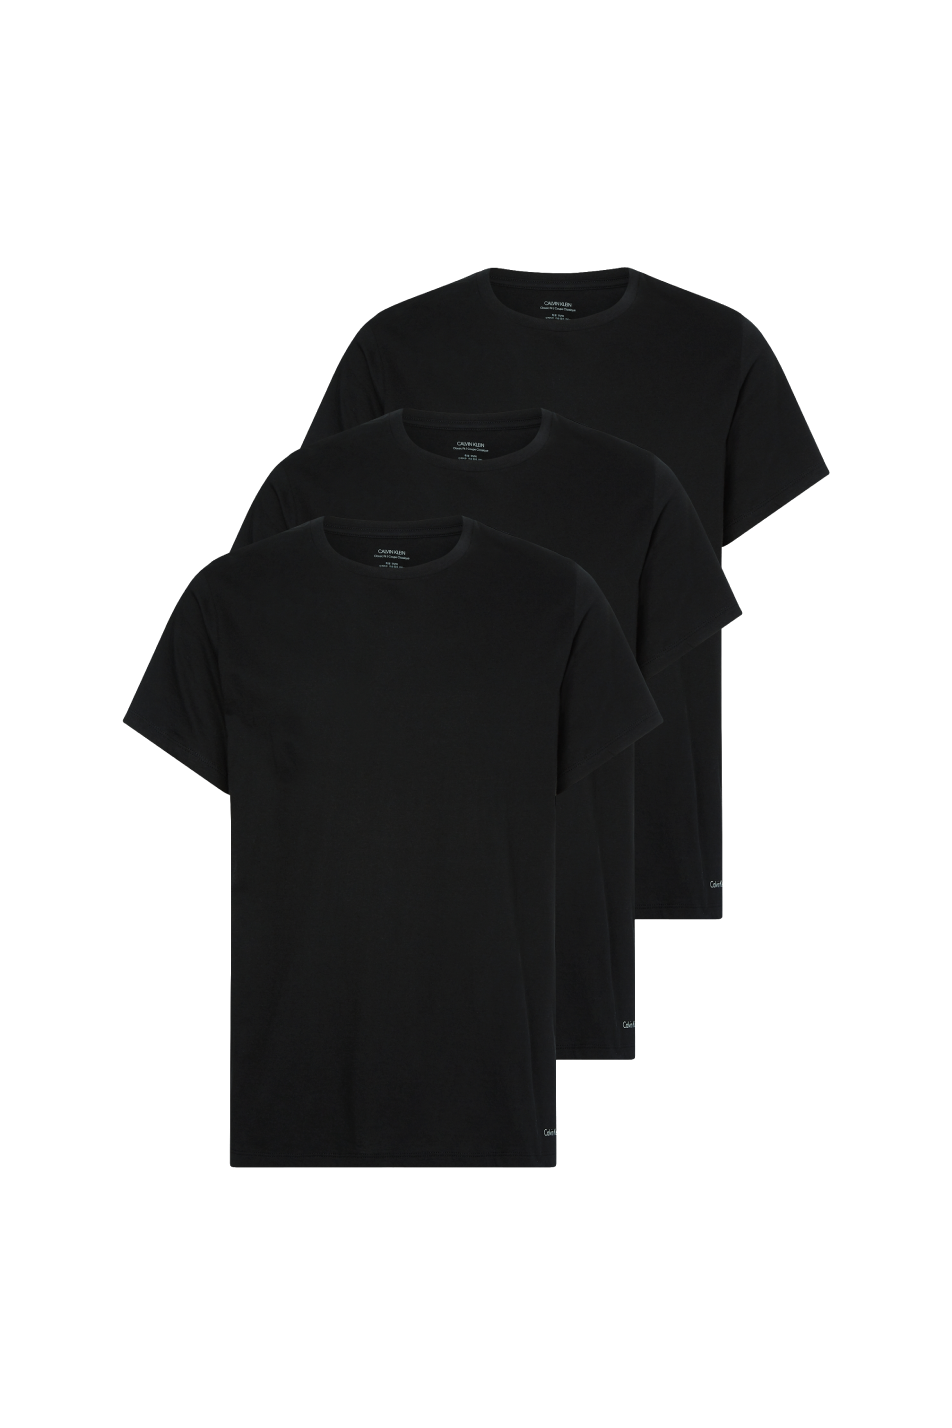 Calvin Klein Men's Crew Neck T-Shirt 3 Pack